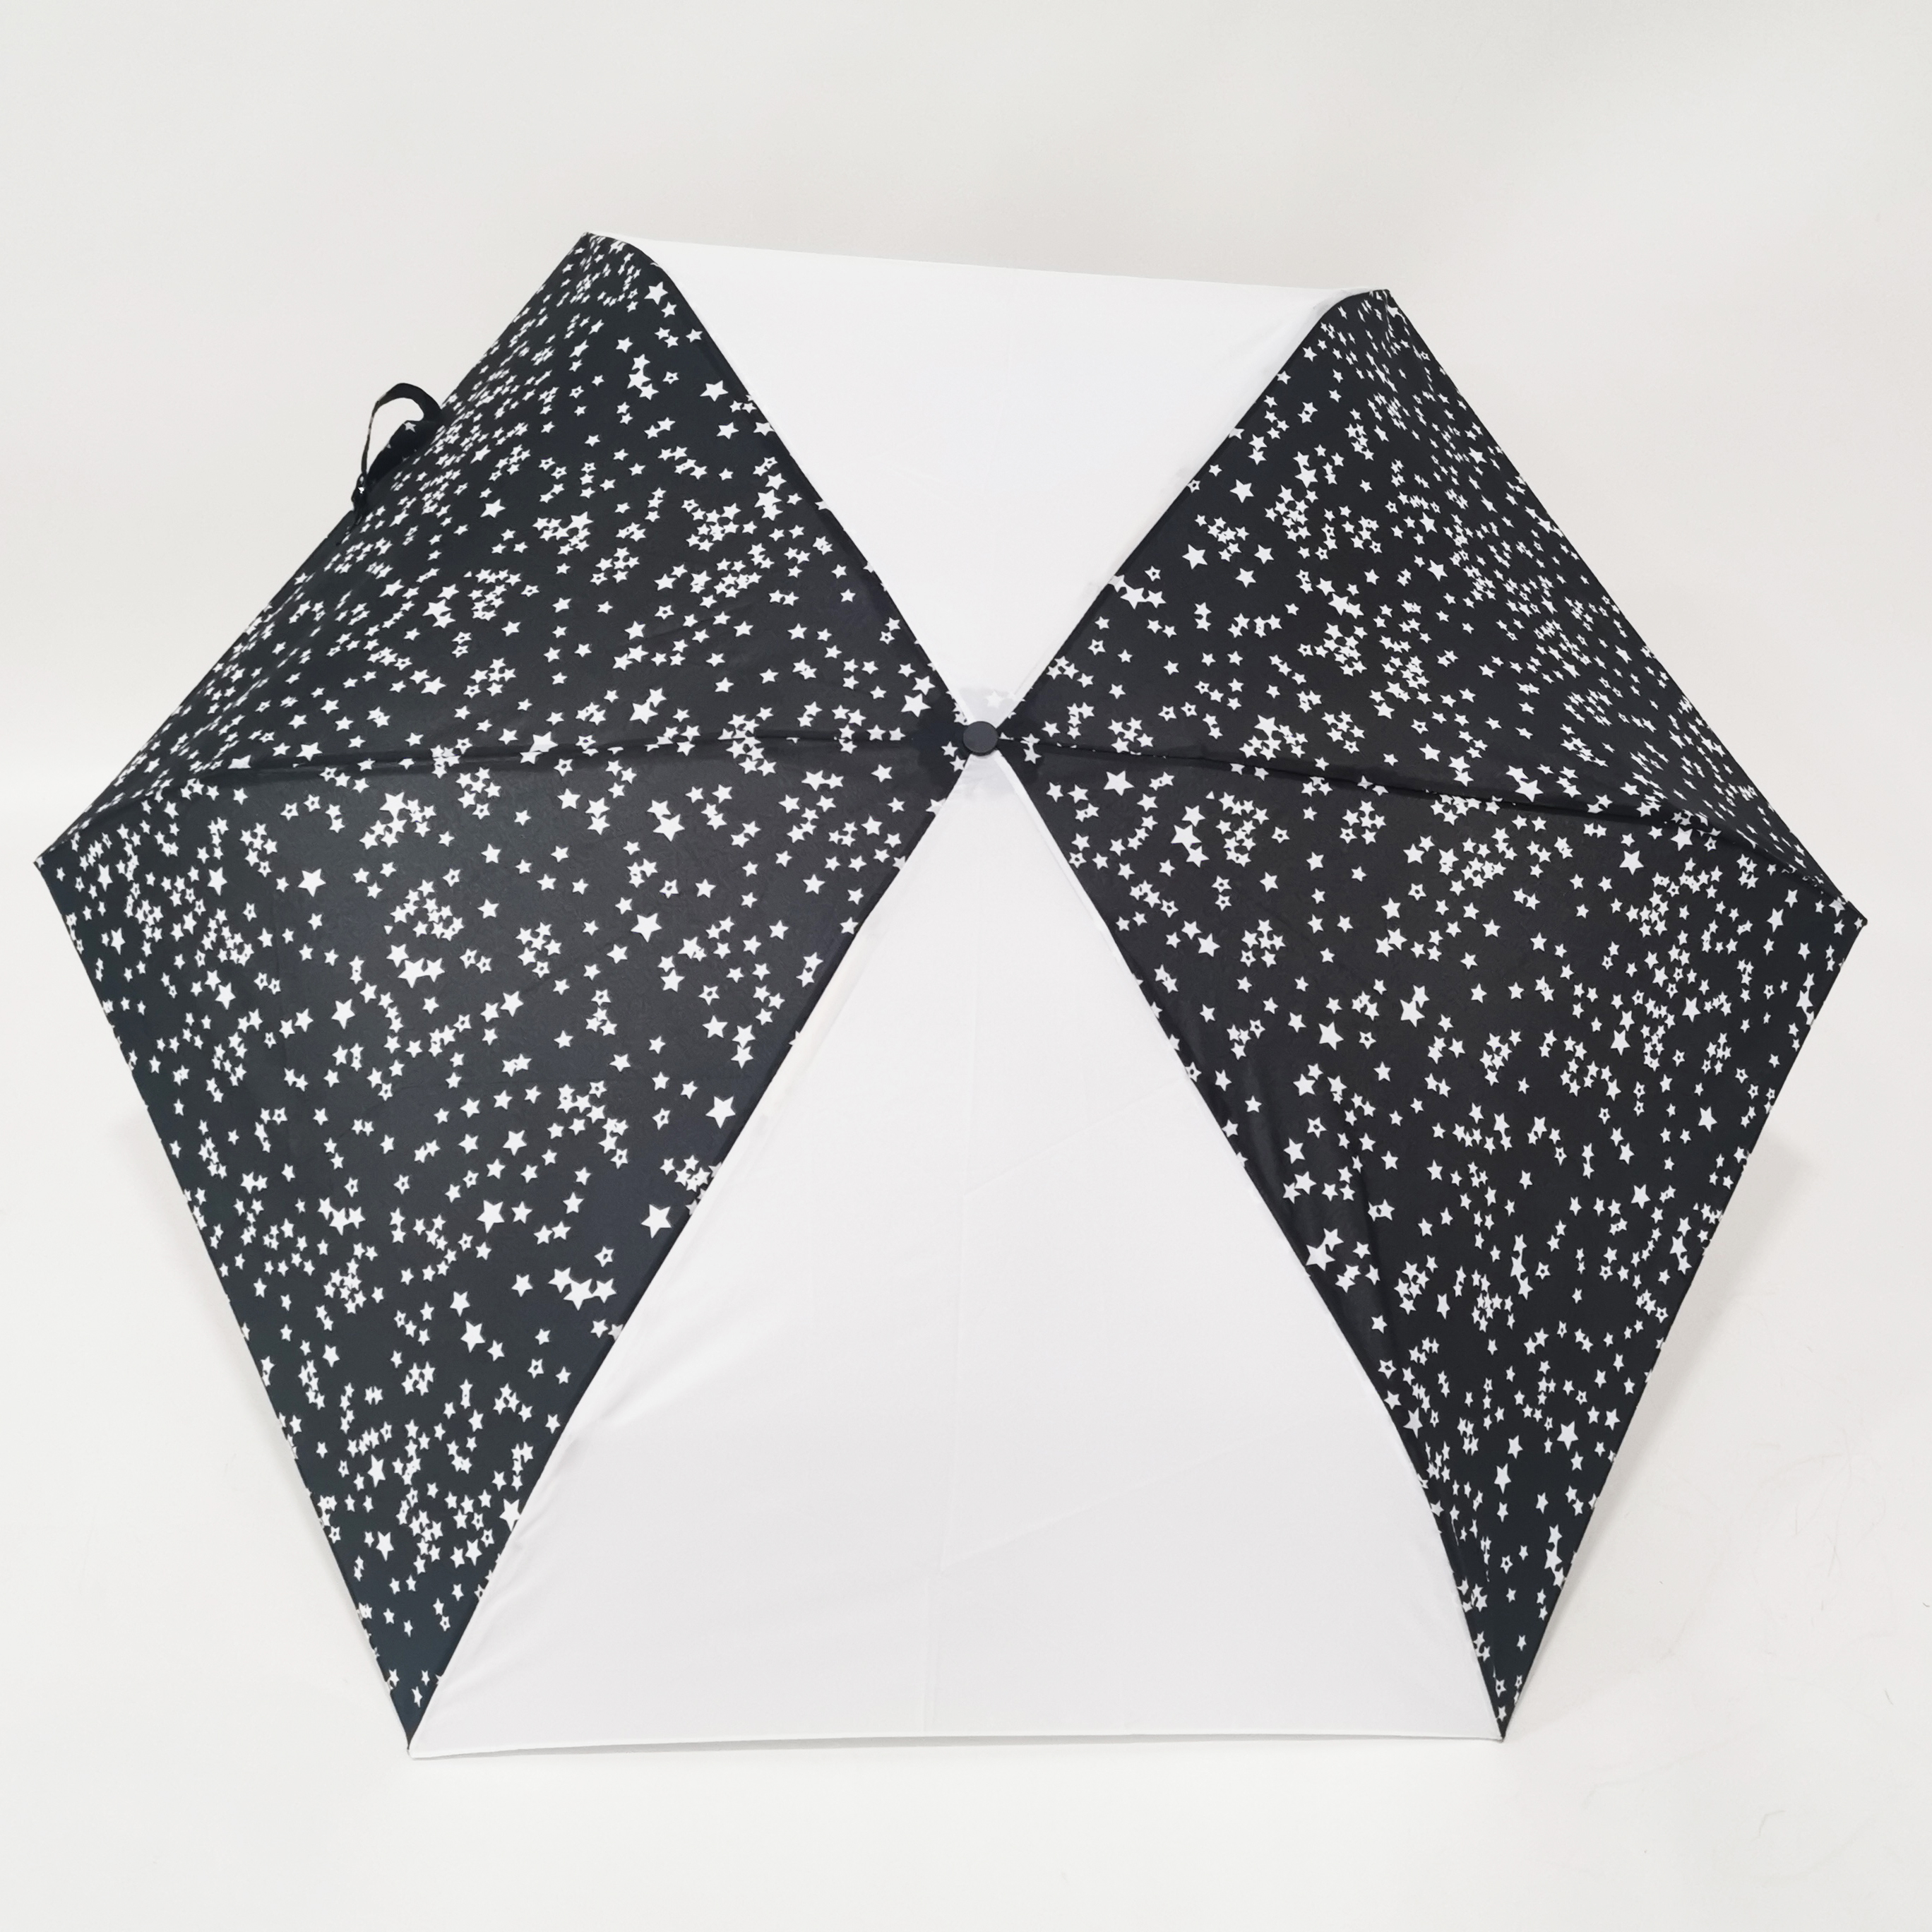 https://www.hodaumbrella.com/just-205g-an-third-folding-umbrella-product/